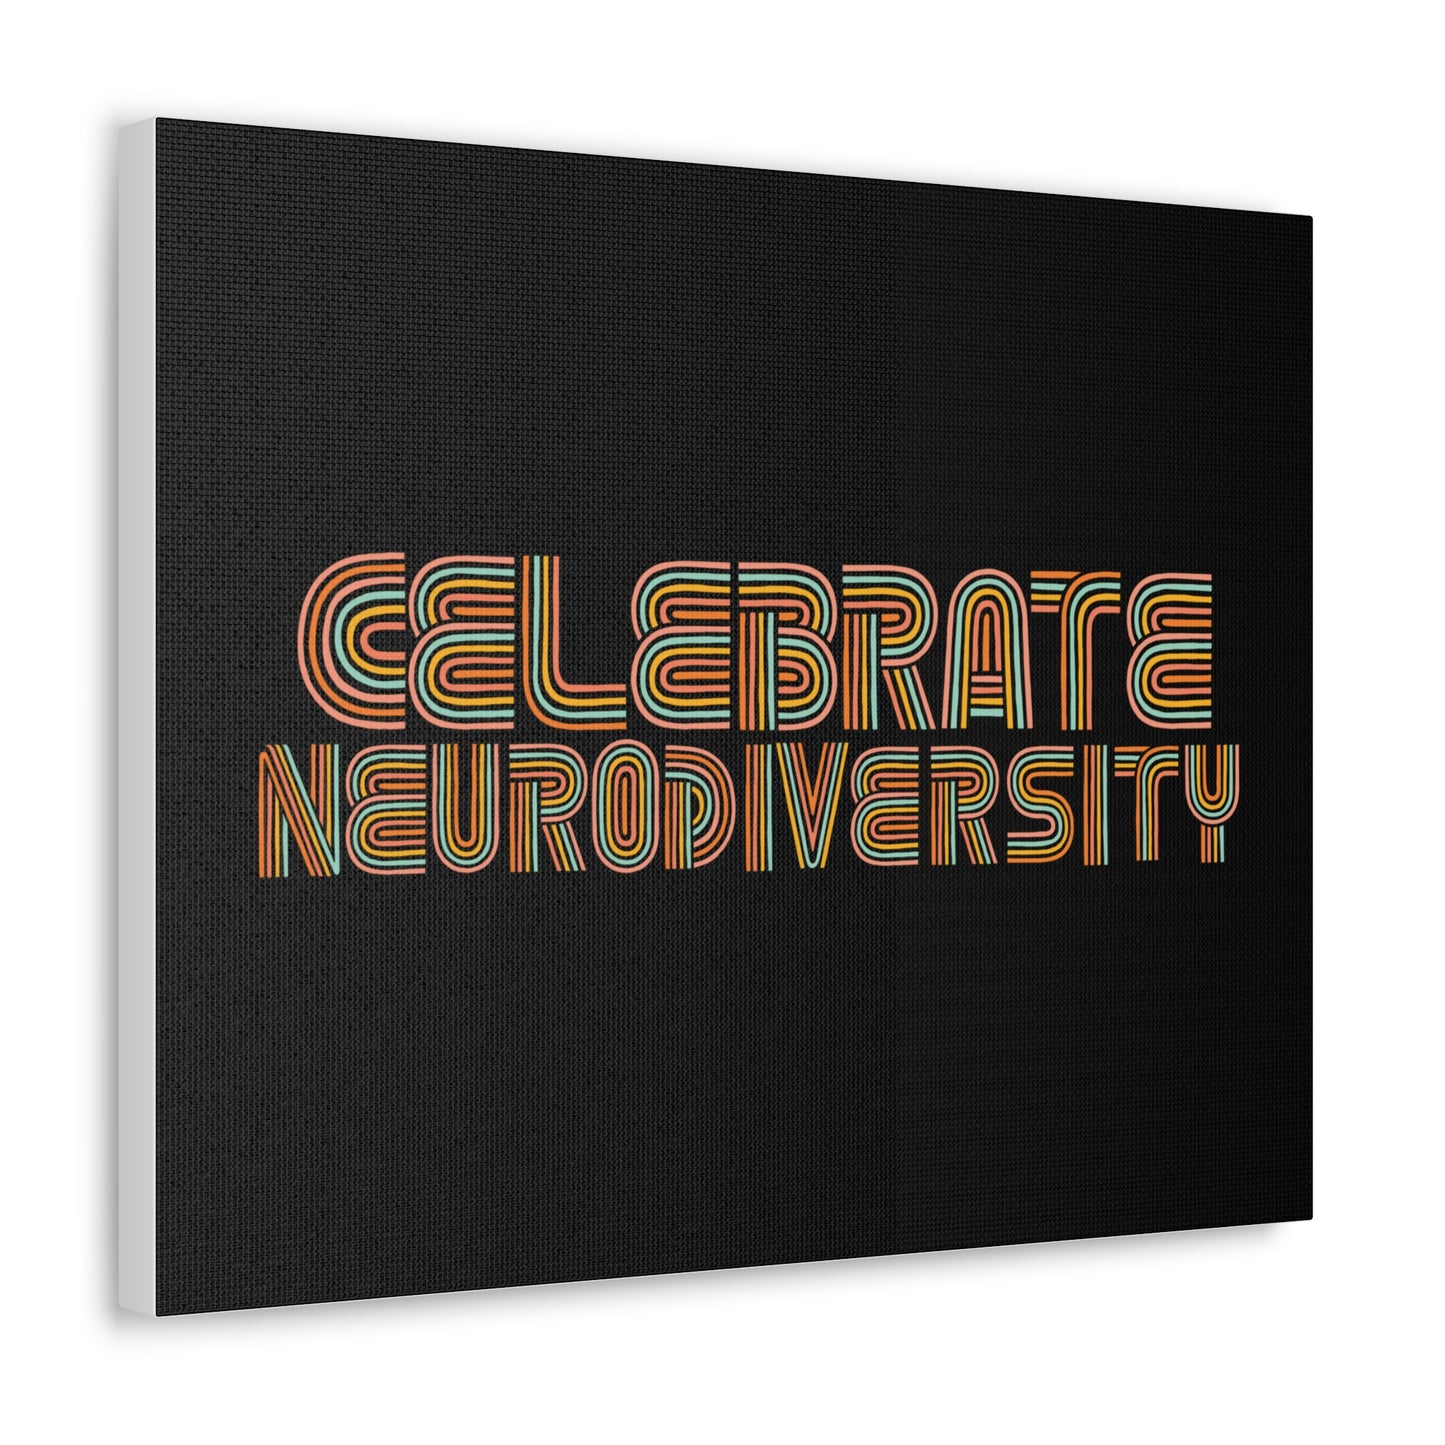 Celebrate Neurodiversity Canvas Print (20 x 16 in)